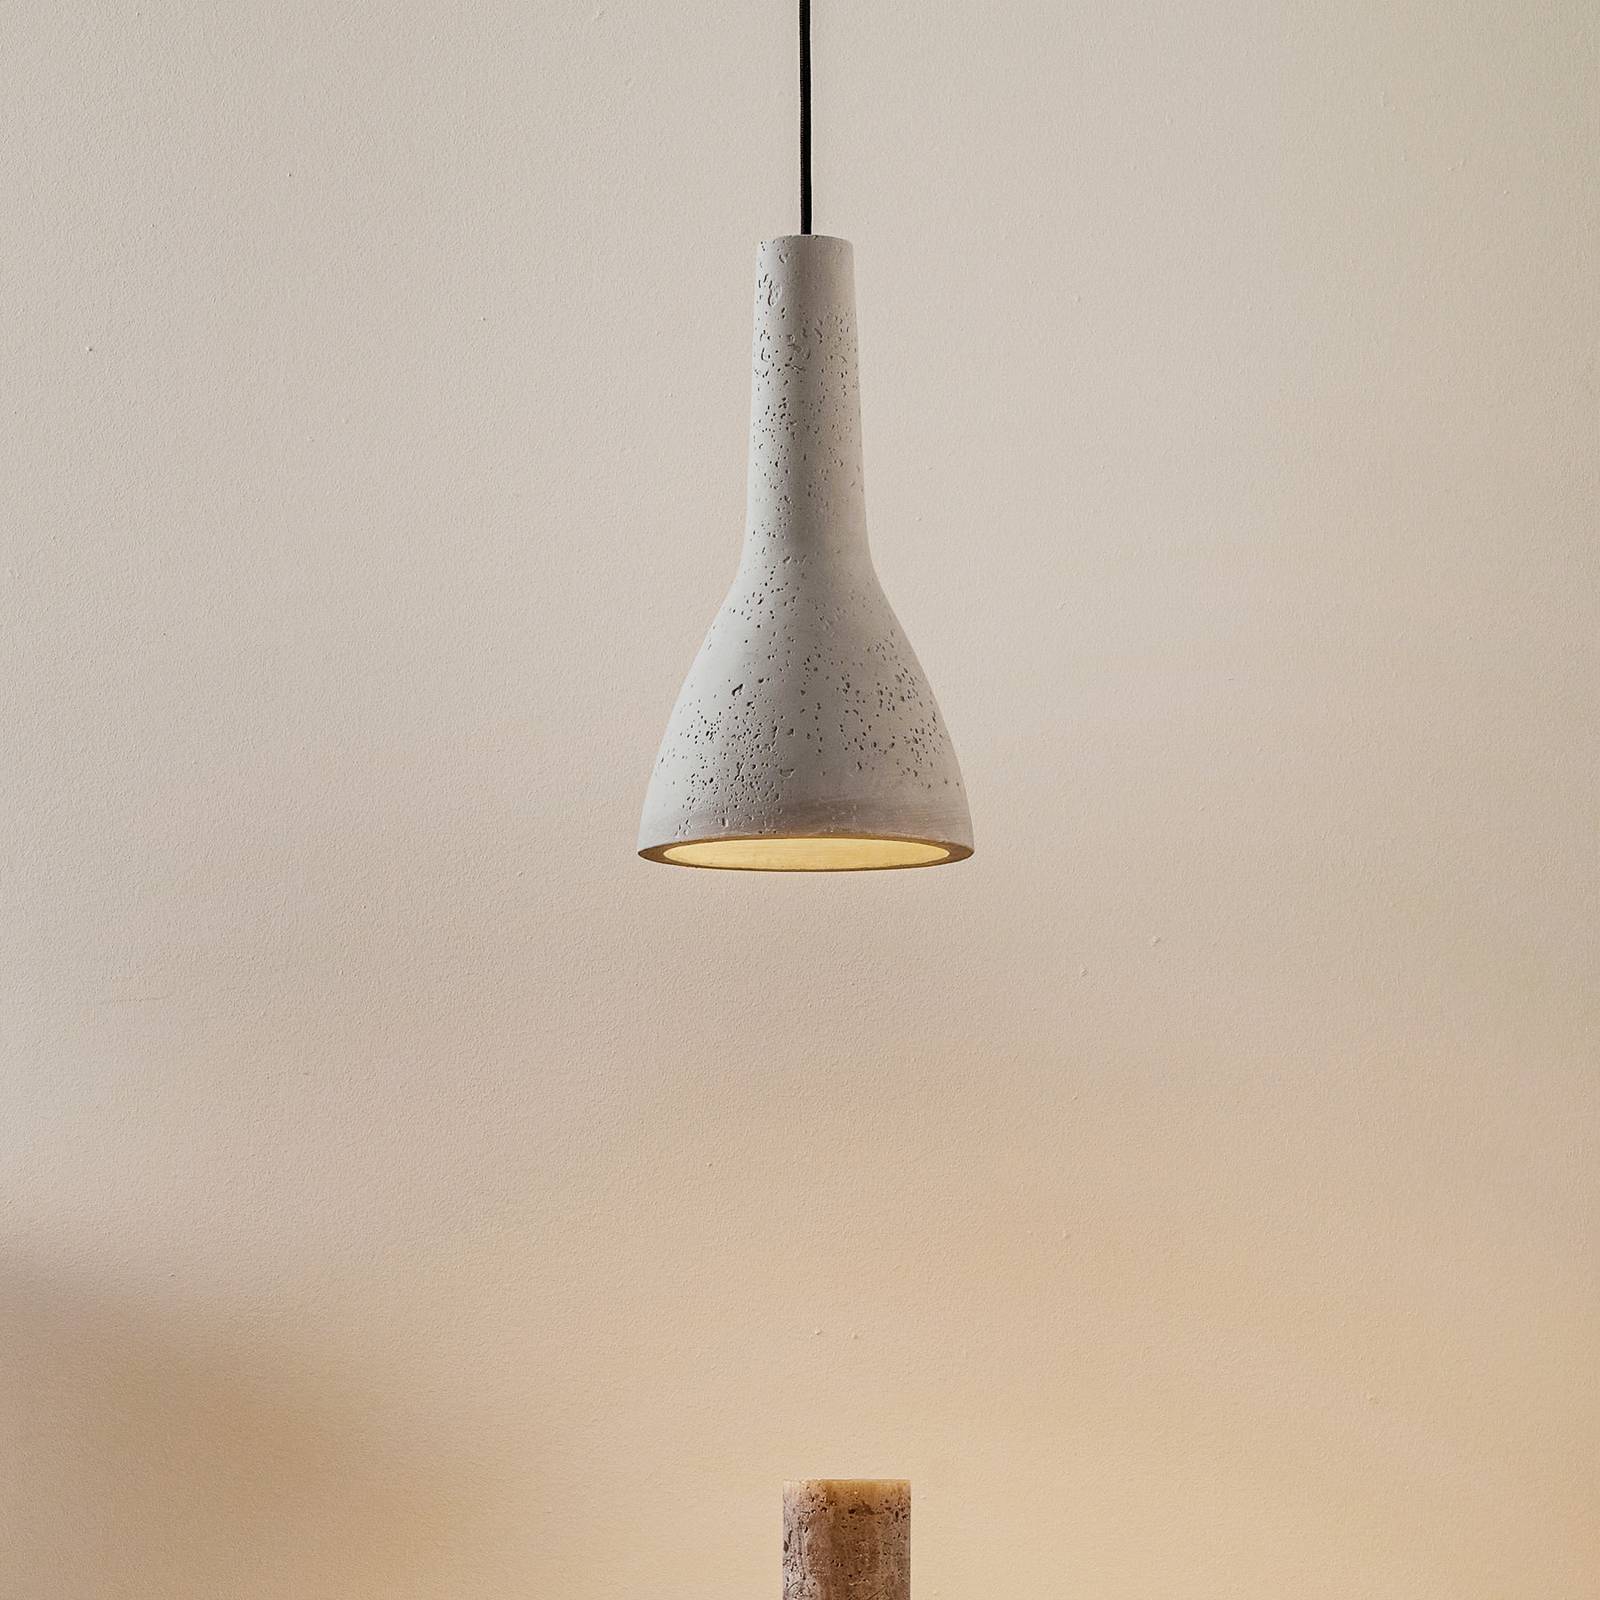 Lampa wisząca Cona z betonu, Ø 17 cm